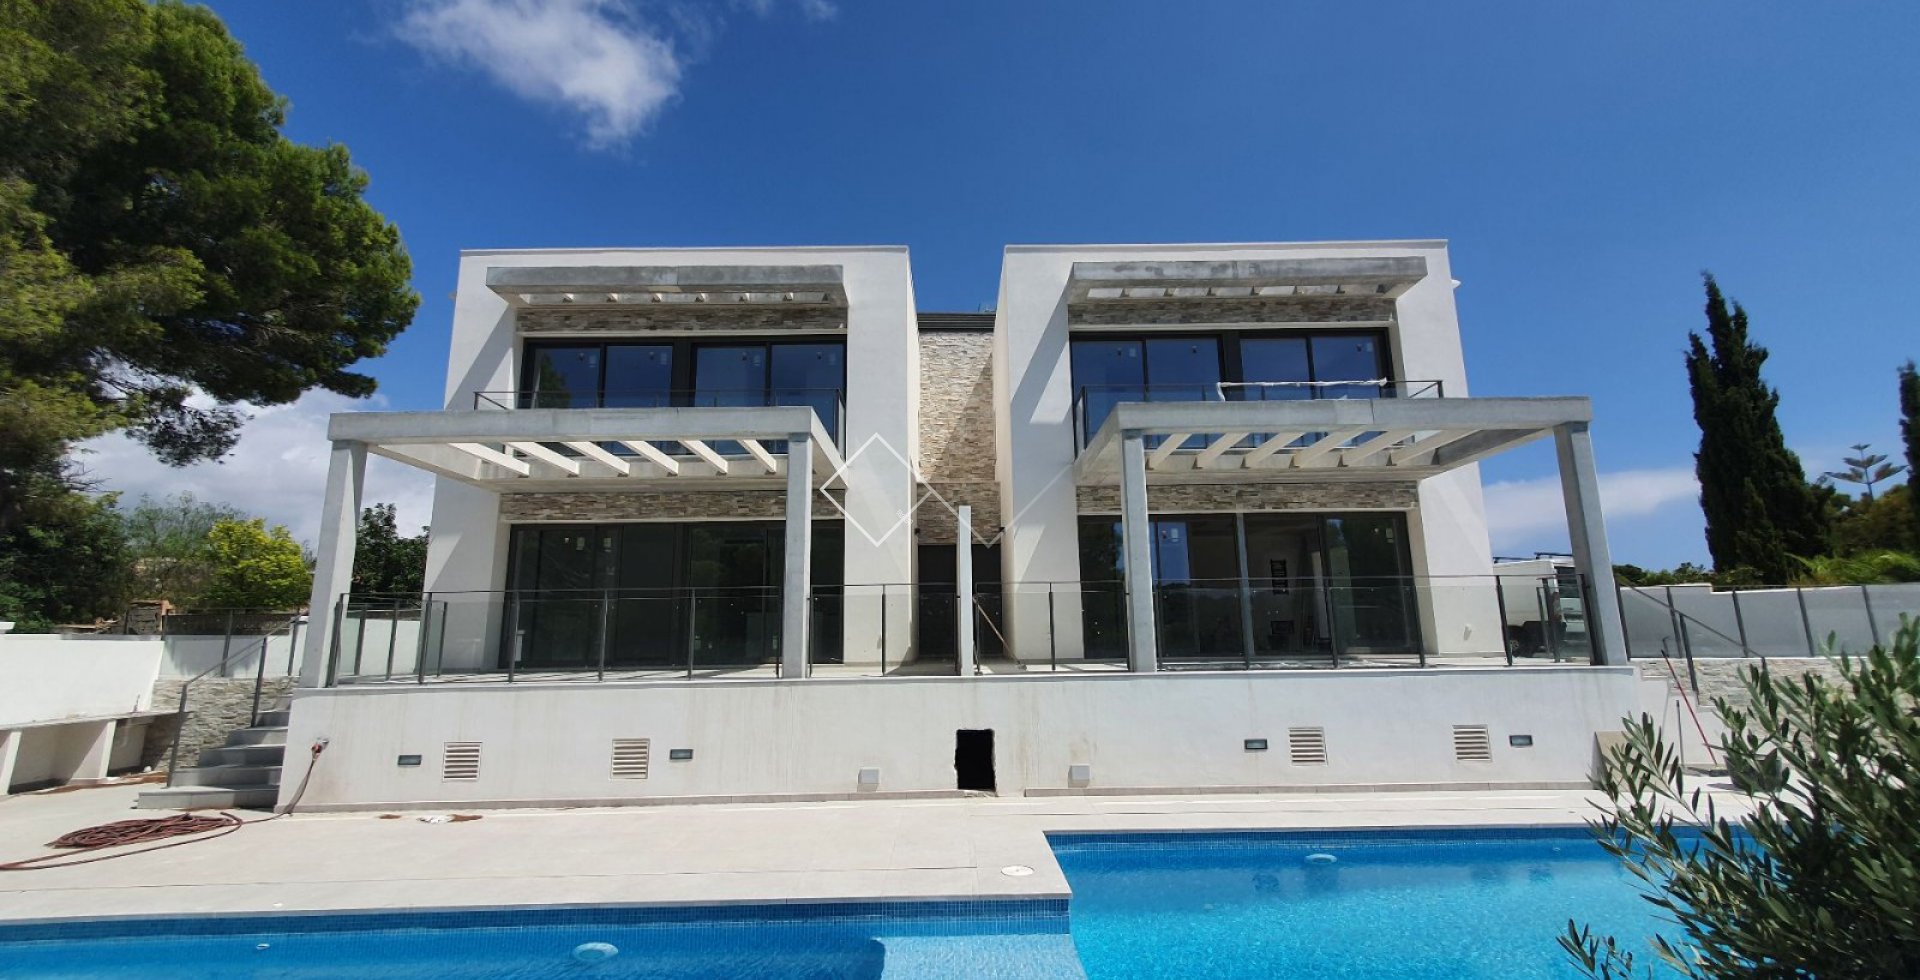 zwembad en villas - Moderne twee onder één kap villa in Moraira